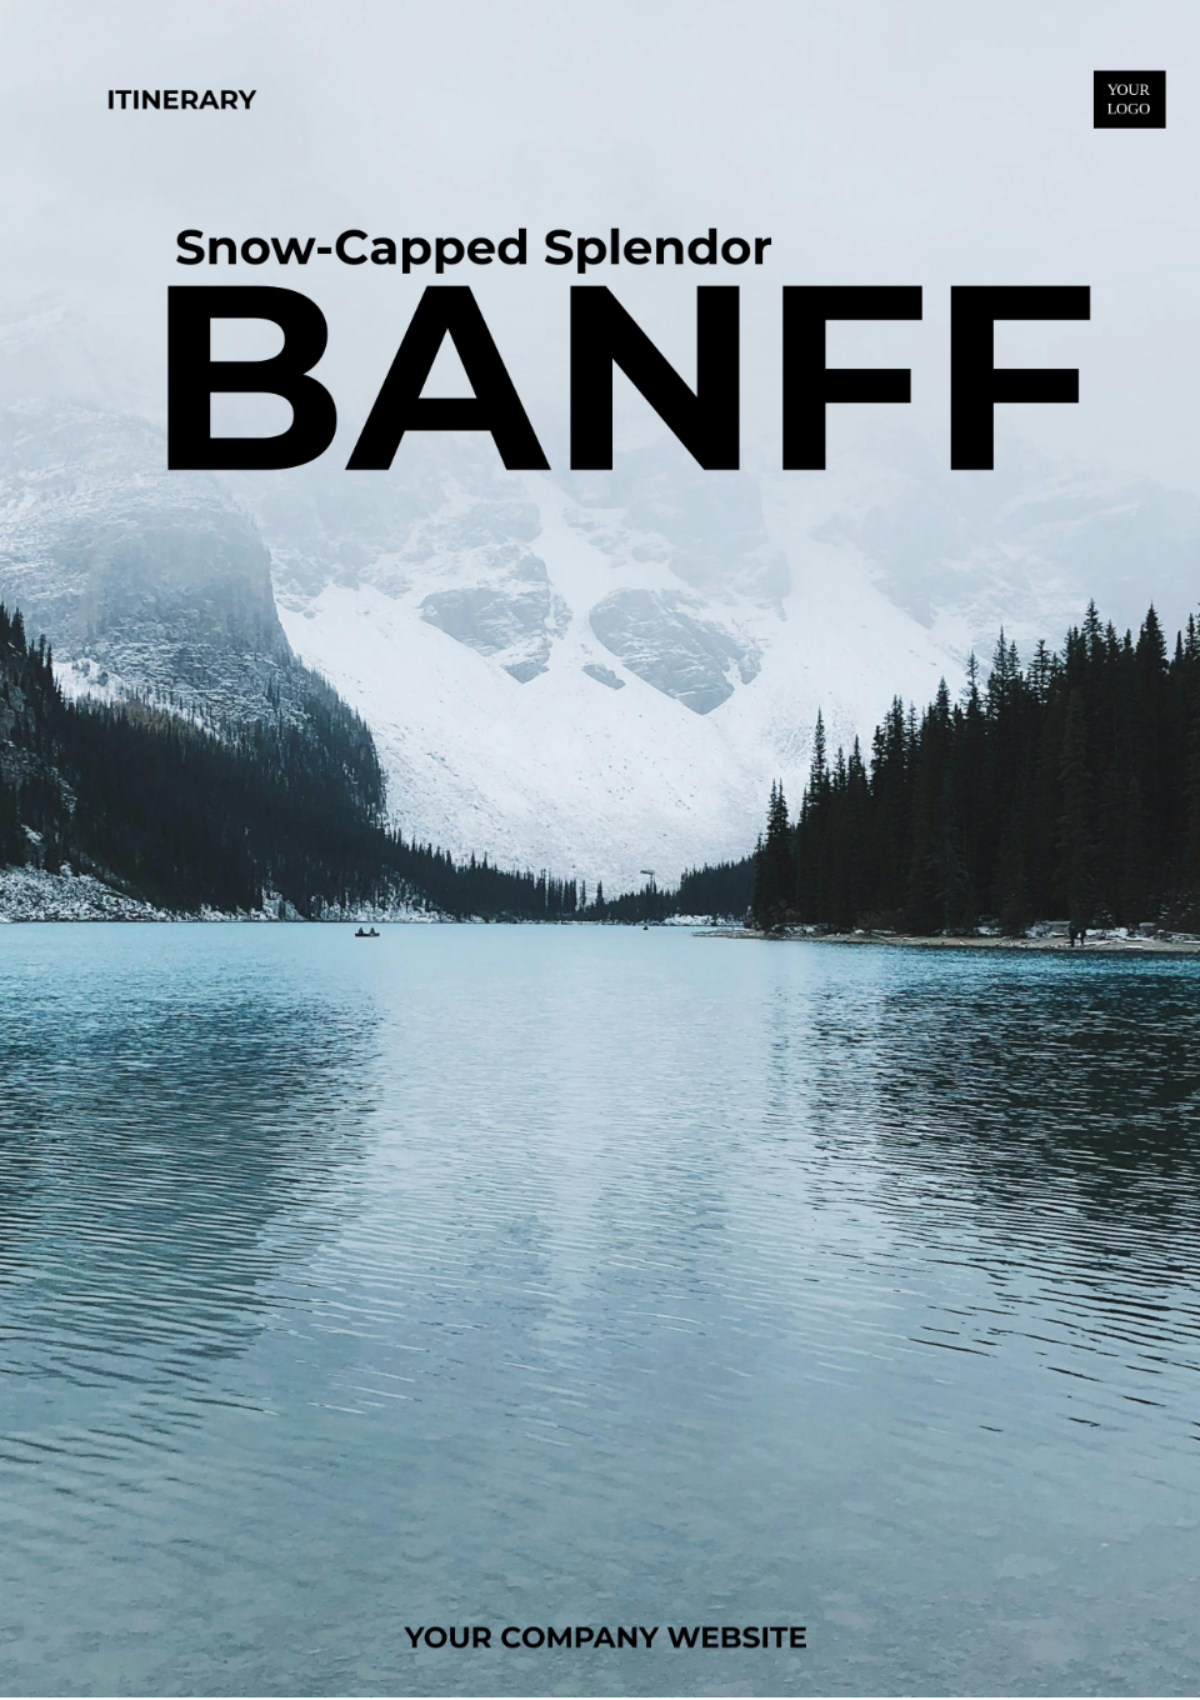 Banff Winter Itinerary Template